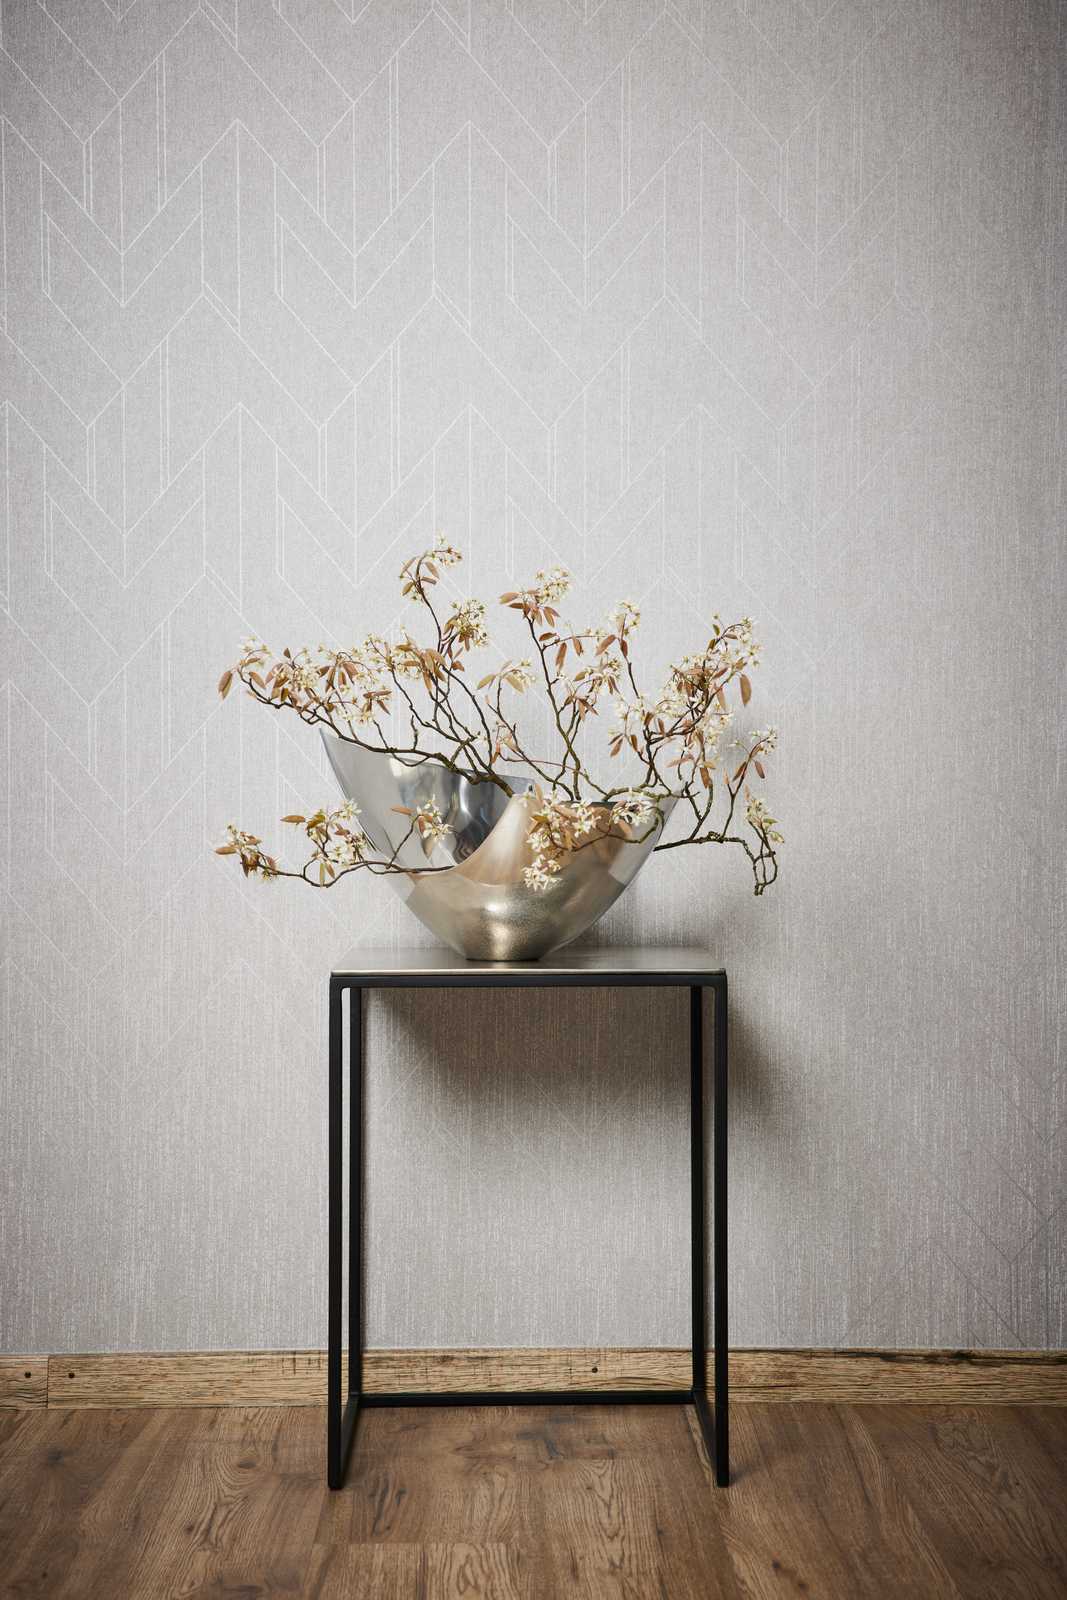             Textiloptik Tapete mit Strukturdesign & silbernem Muster – Grau
        